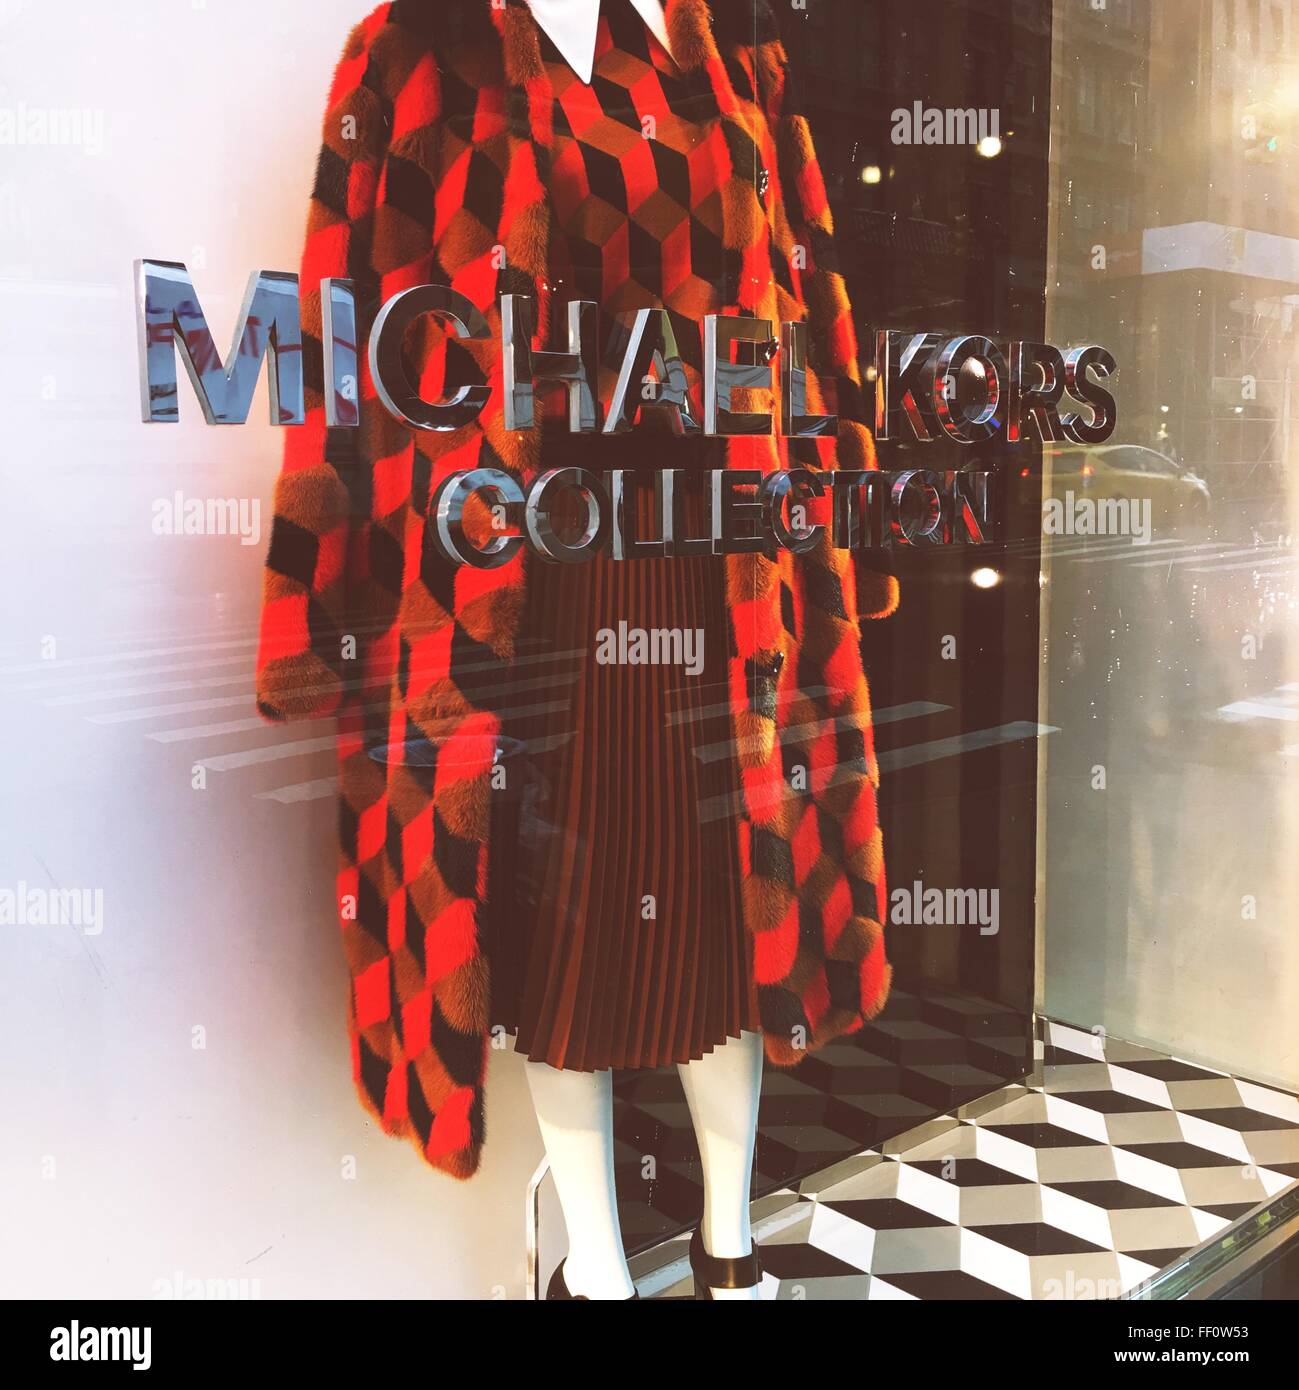 Michael Kors store, New York, USA Stock Photo - Alamy